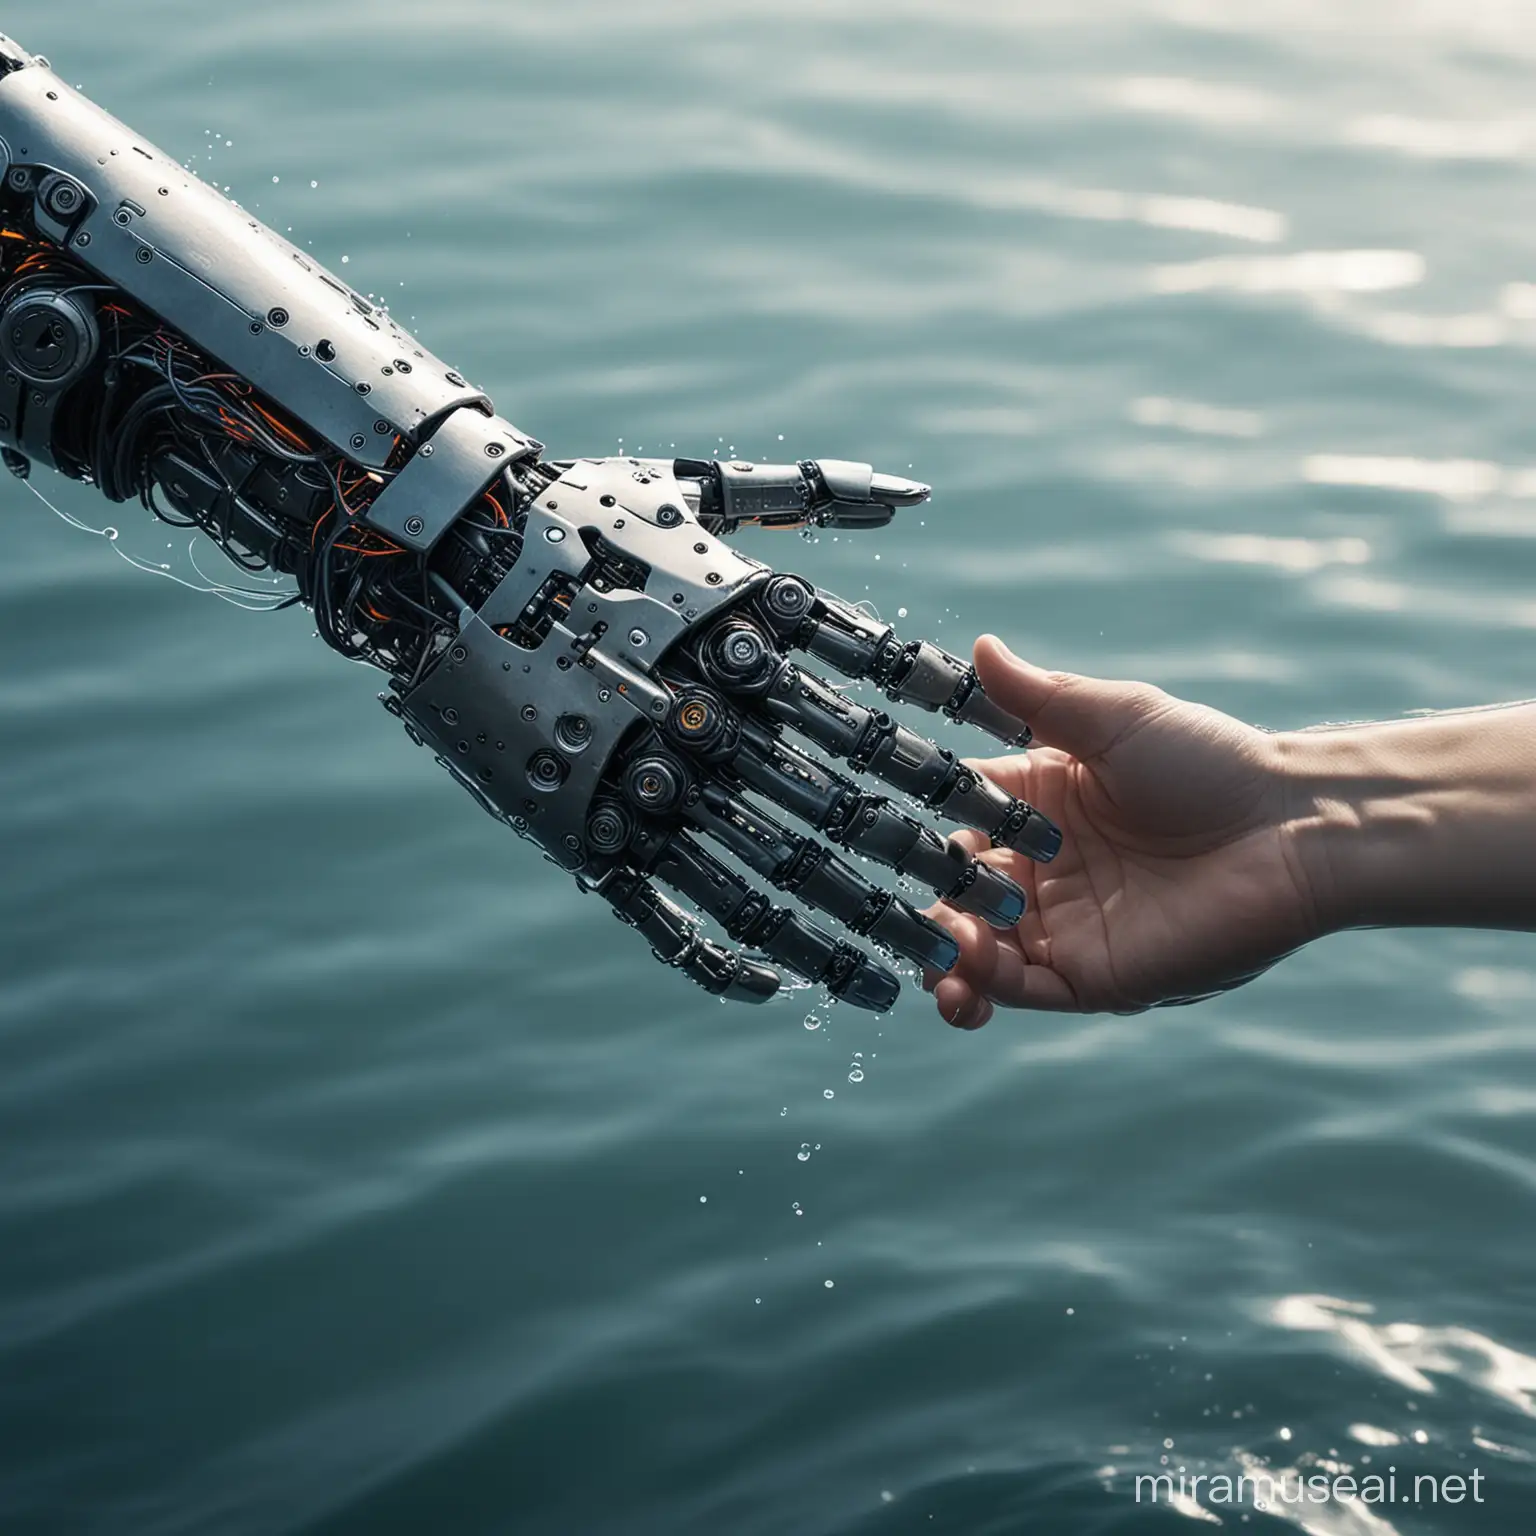 Robot Hand Shaking Human Hand Over Water